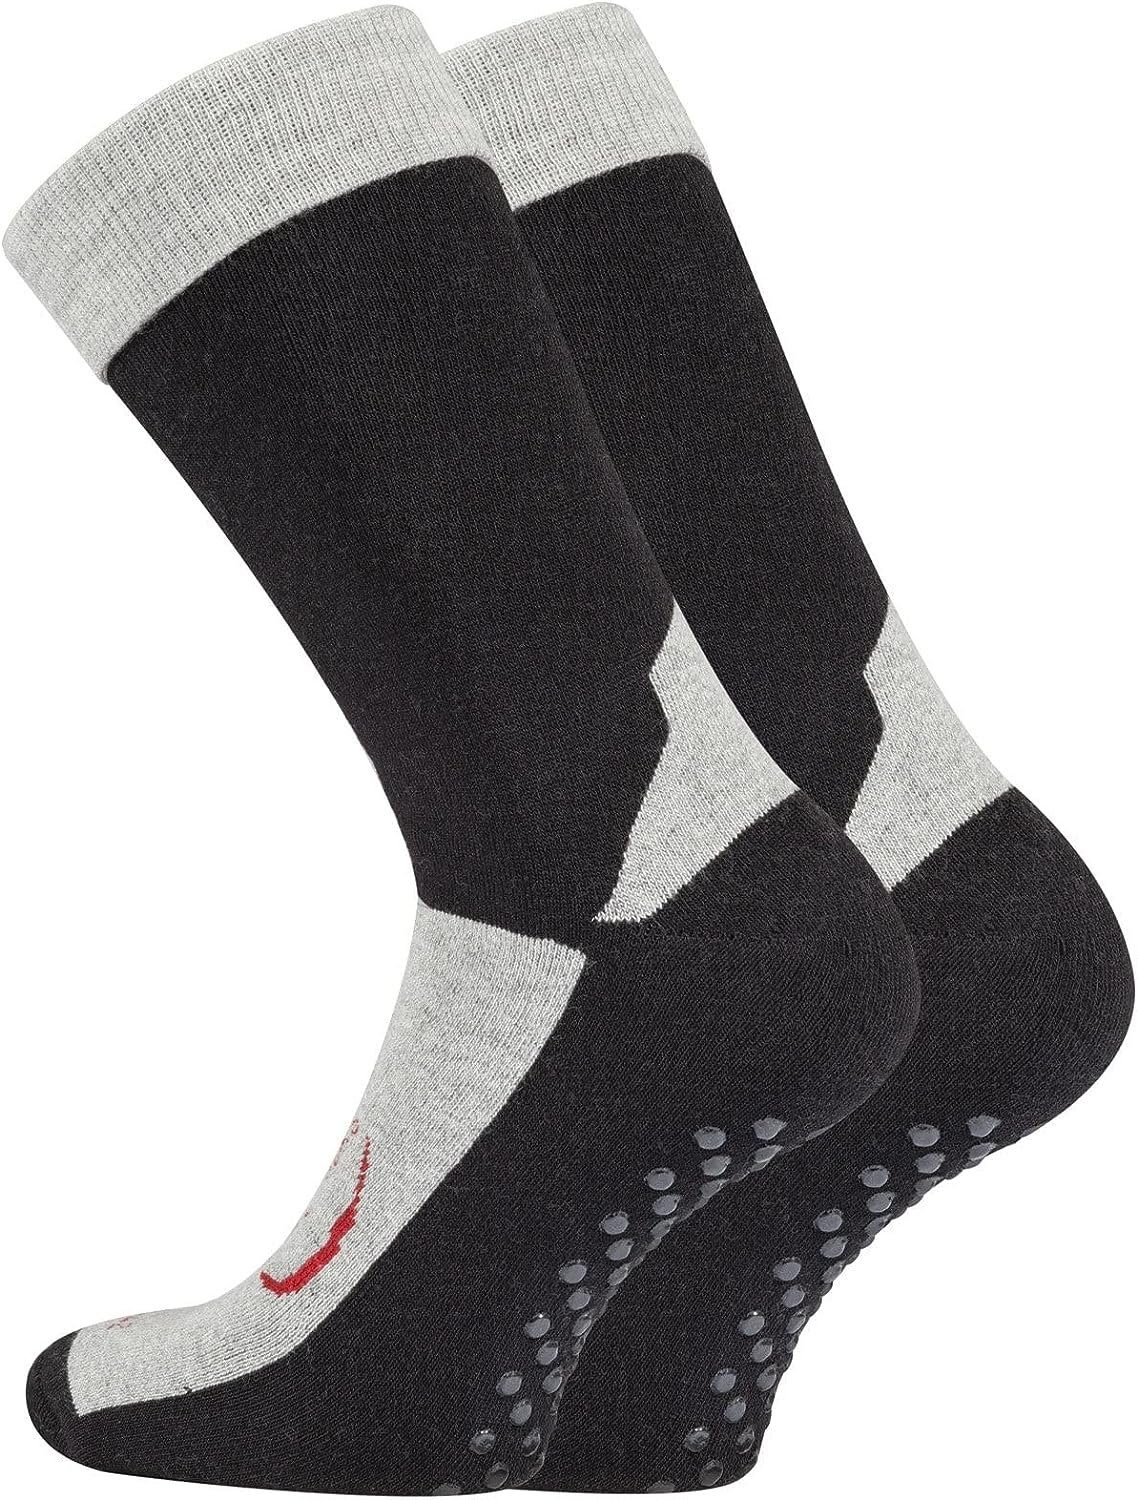 TippTexx 24 Haussocken 2 Paar Anti-Rutsch-Socken Homesocks Stopper-Socken, ABS-Socken